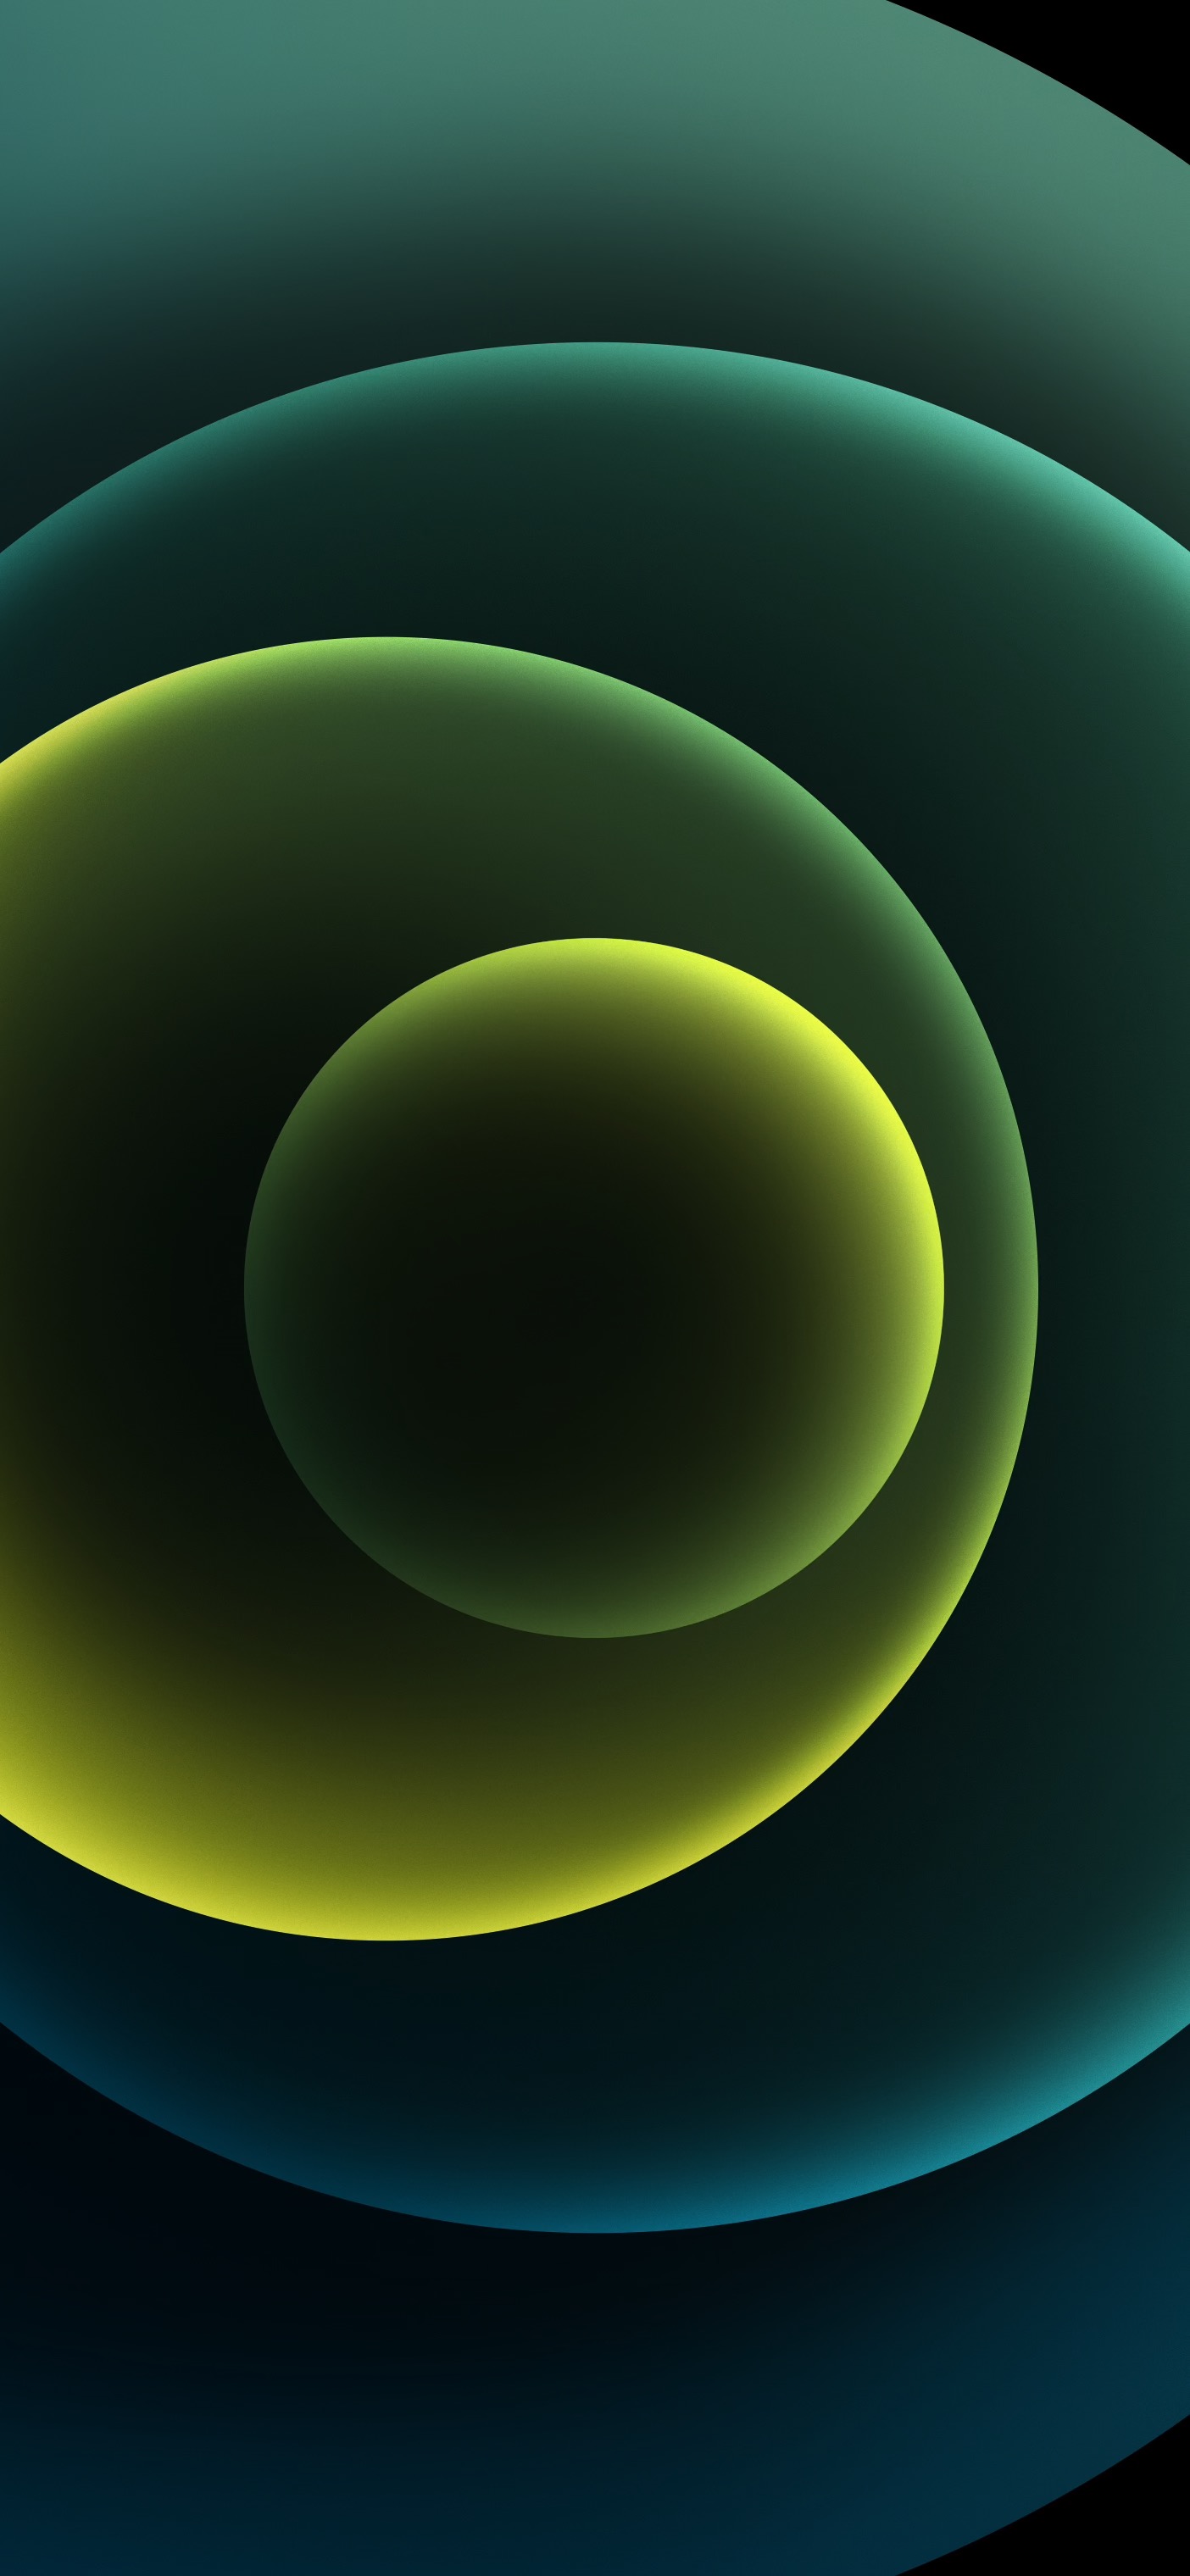 iPhone 12 - Orbs Green (Dark) | LIVE Wallpaper ...